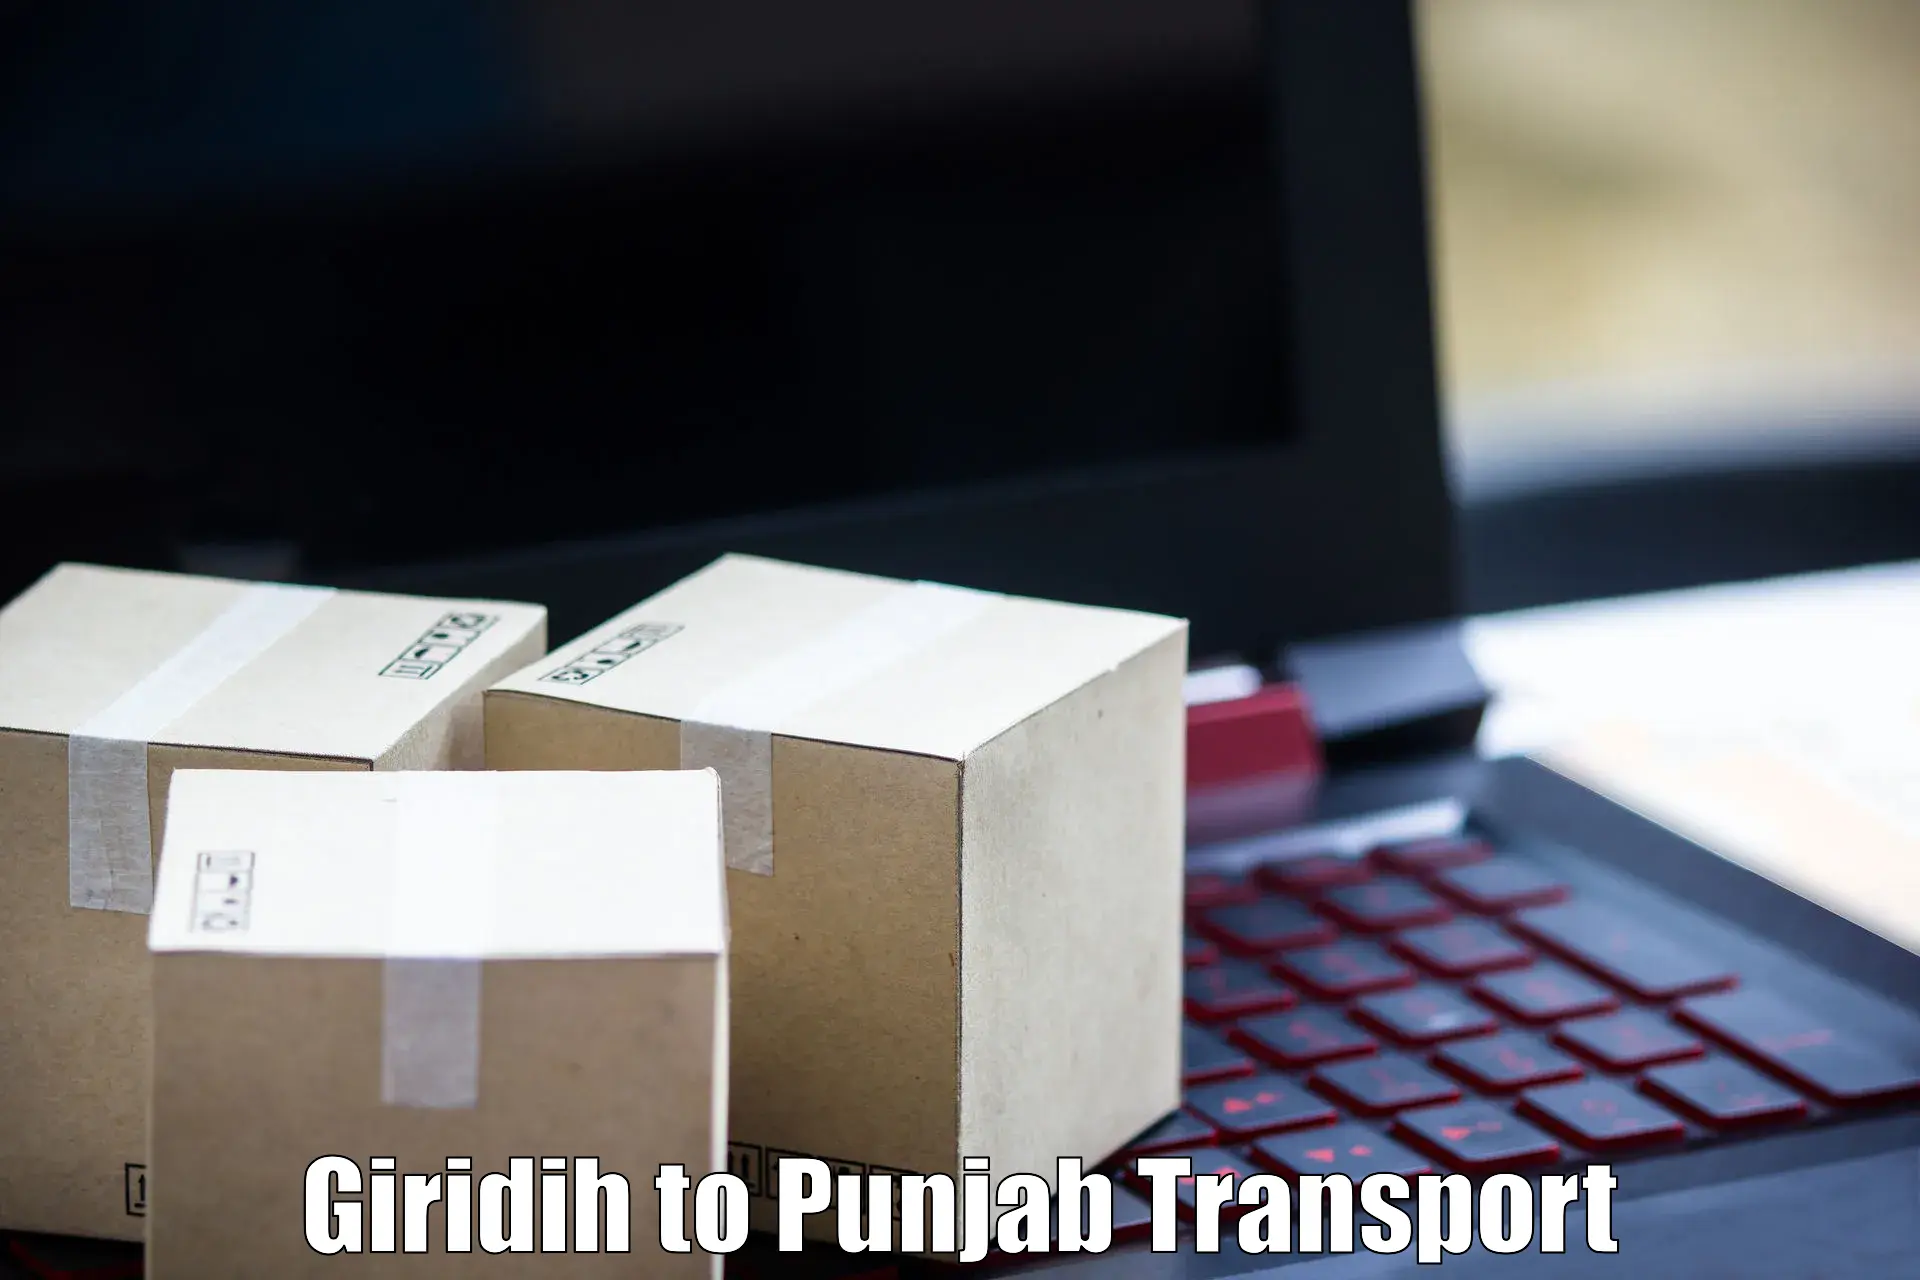 Delivery service Giridih to Nawanshahr